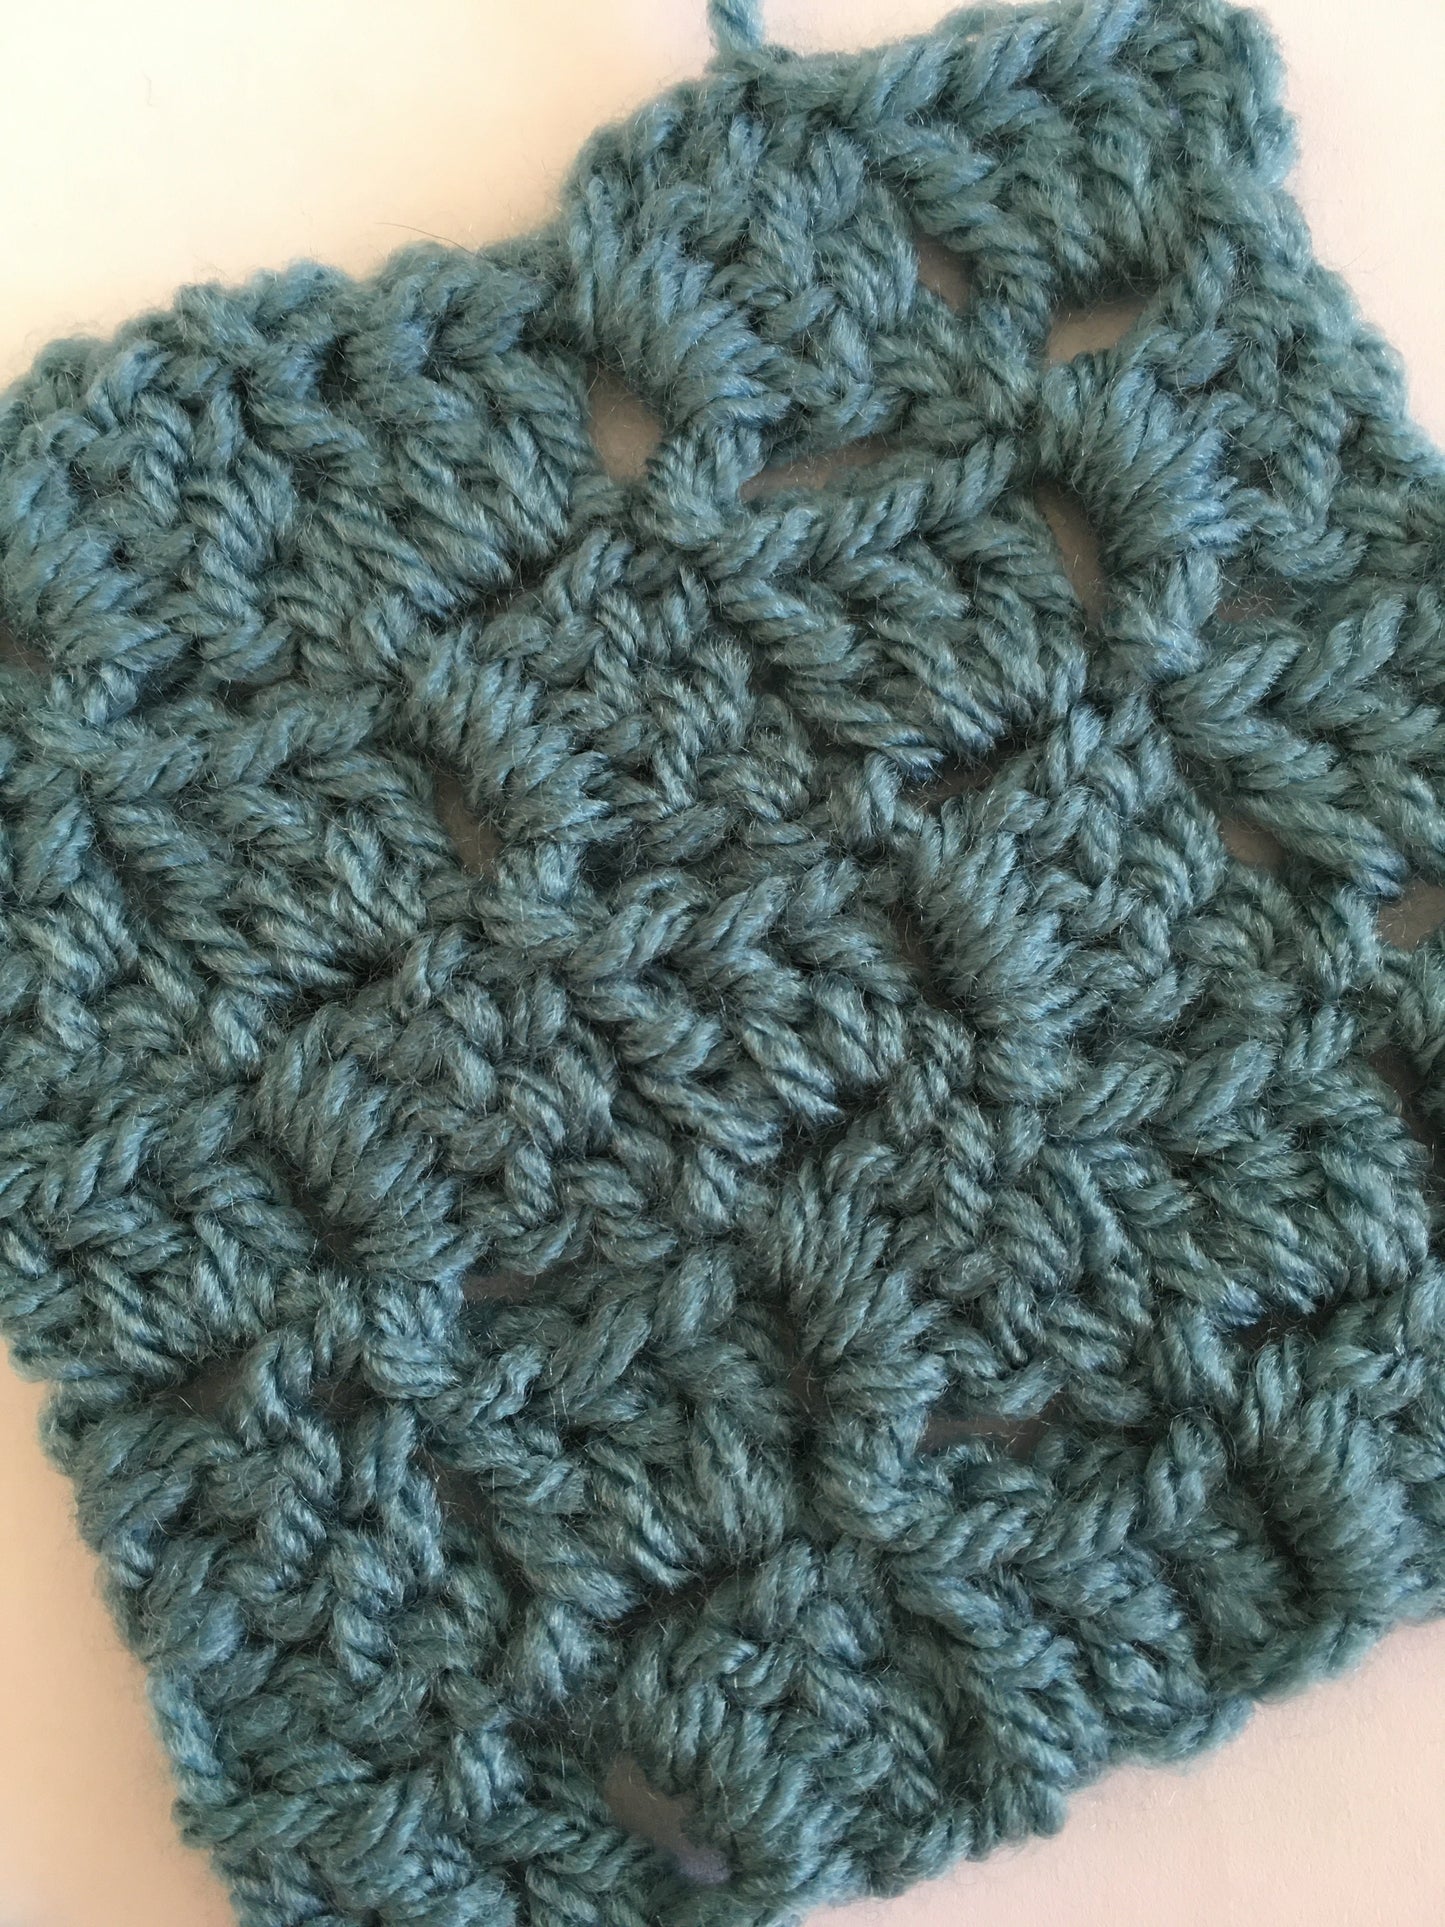 Crochet Next Steps Workshop - Monday 20th November